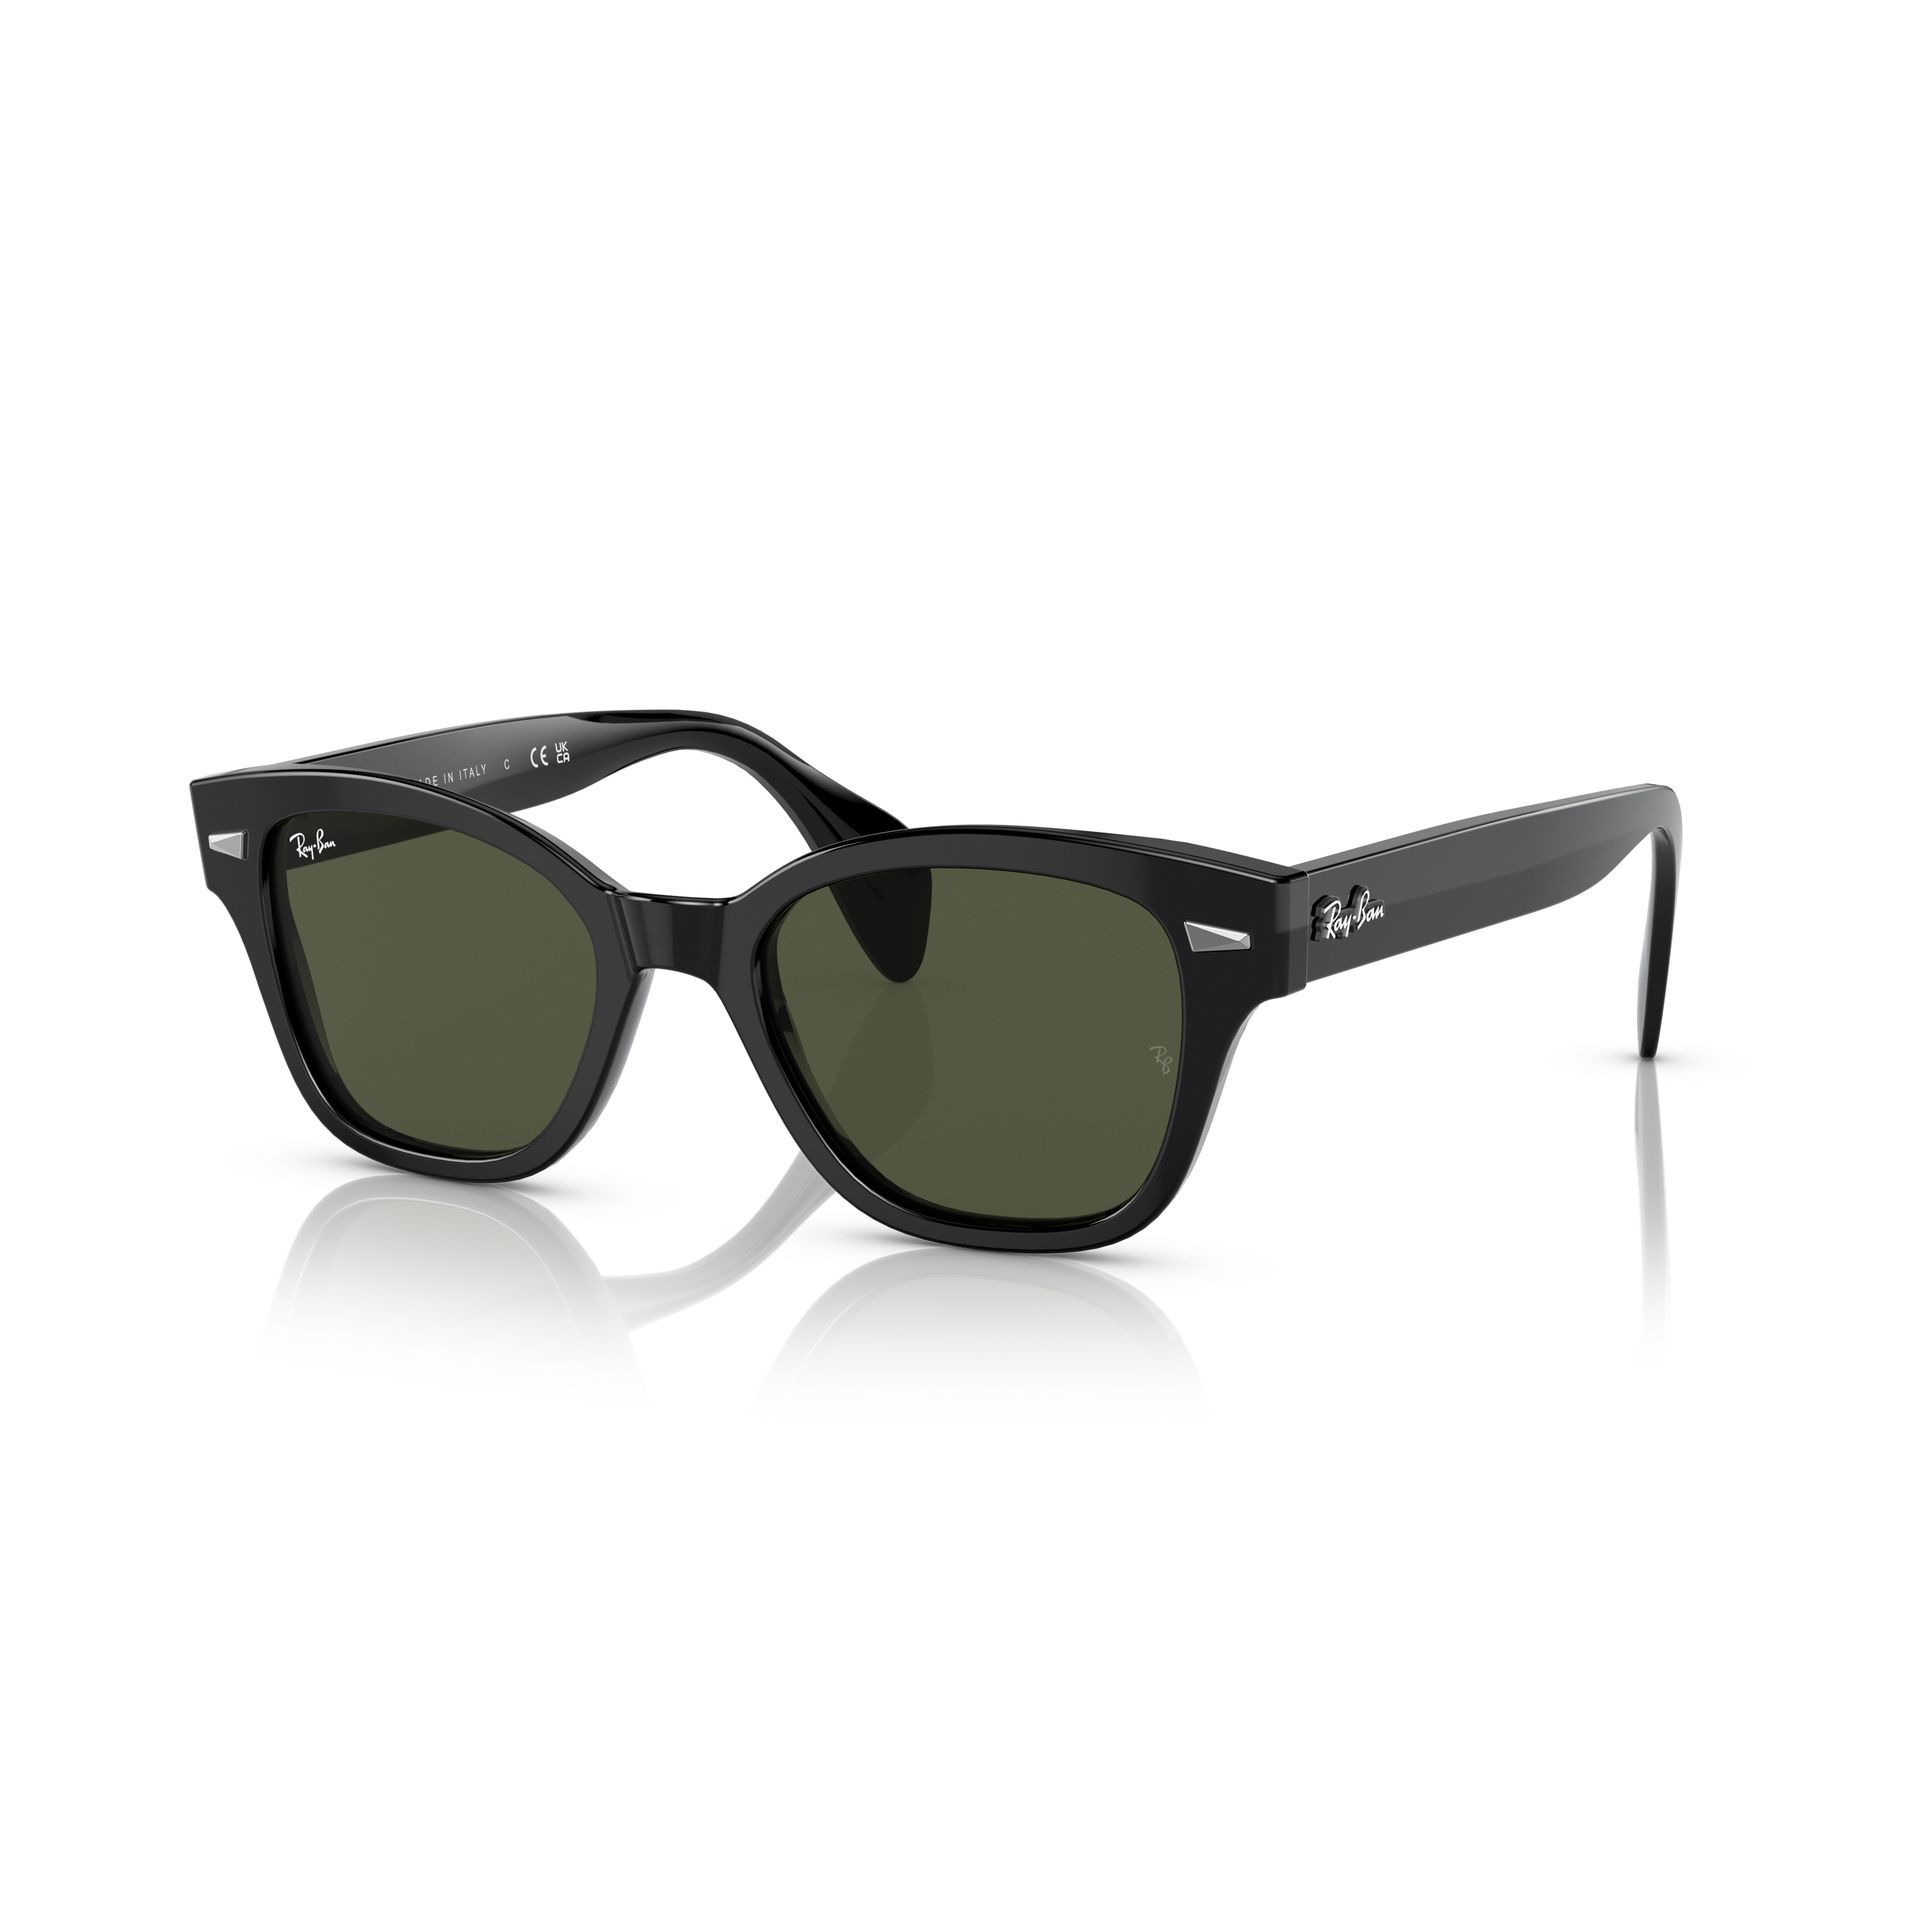 0RB0880S Square Sunglasses 901 31 - size 49